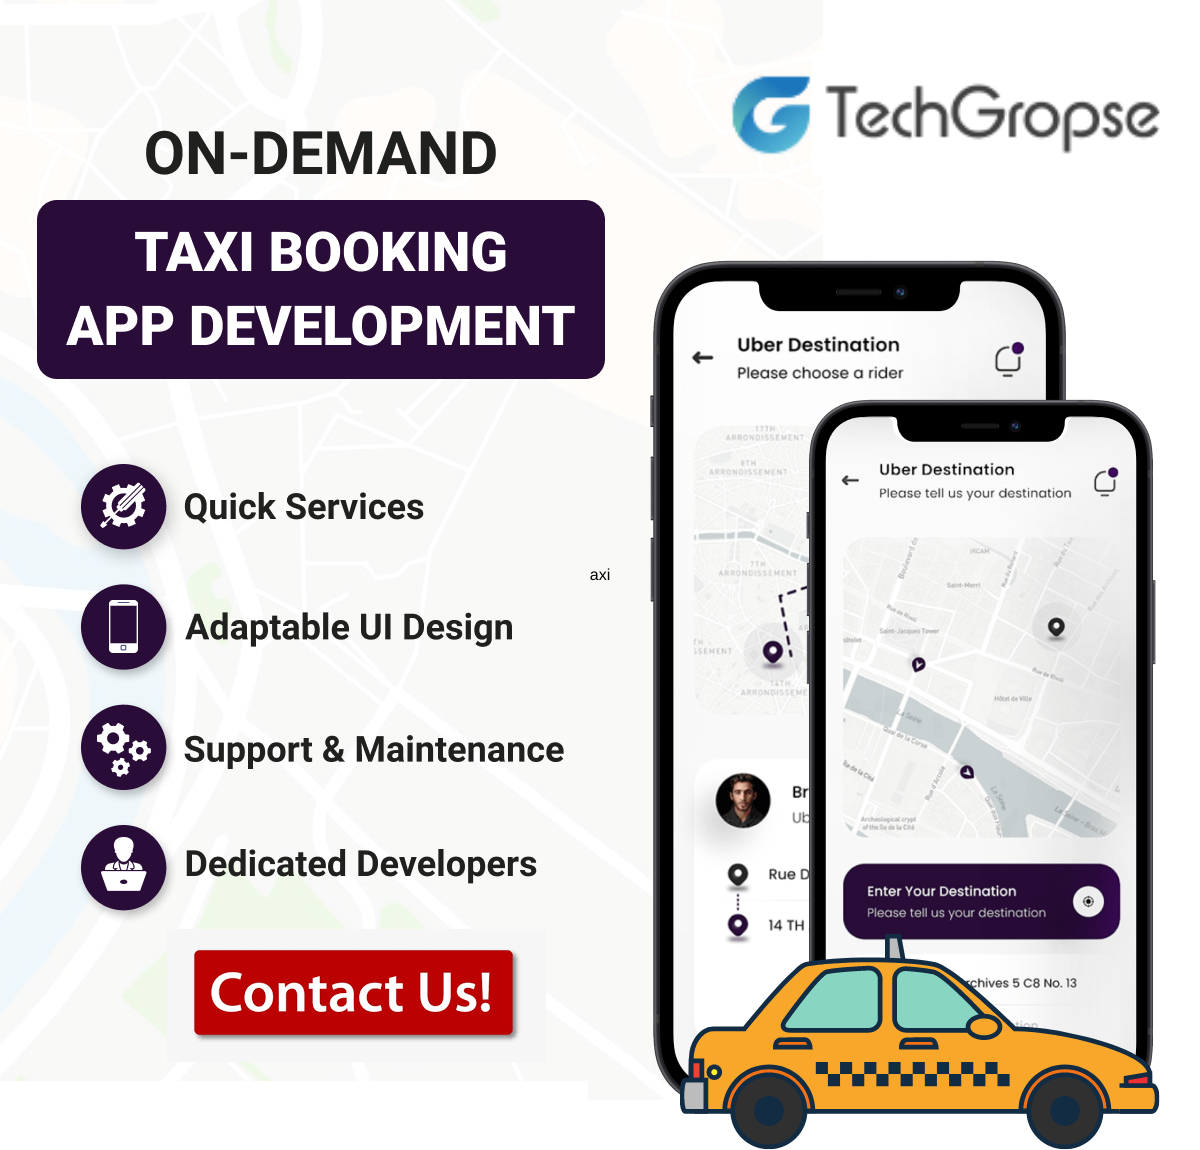 on demand taxi app development company techgropse